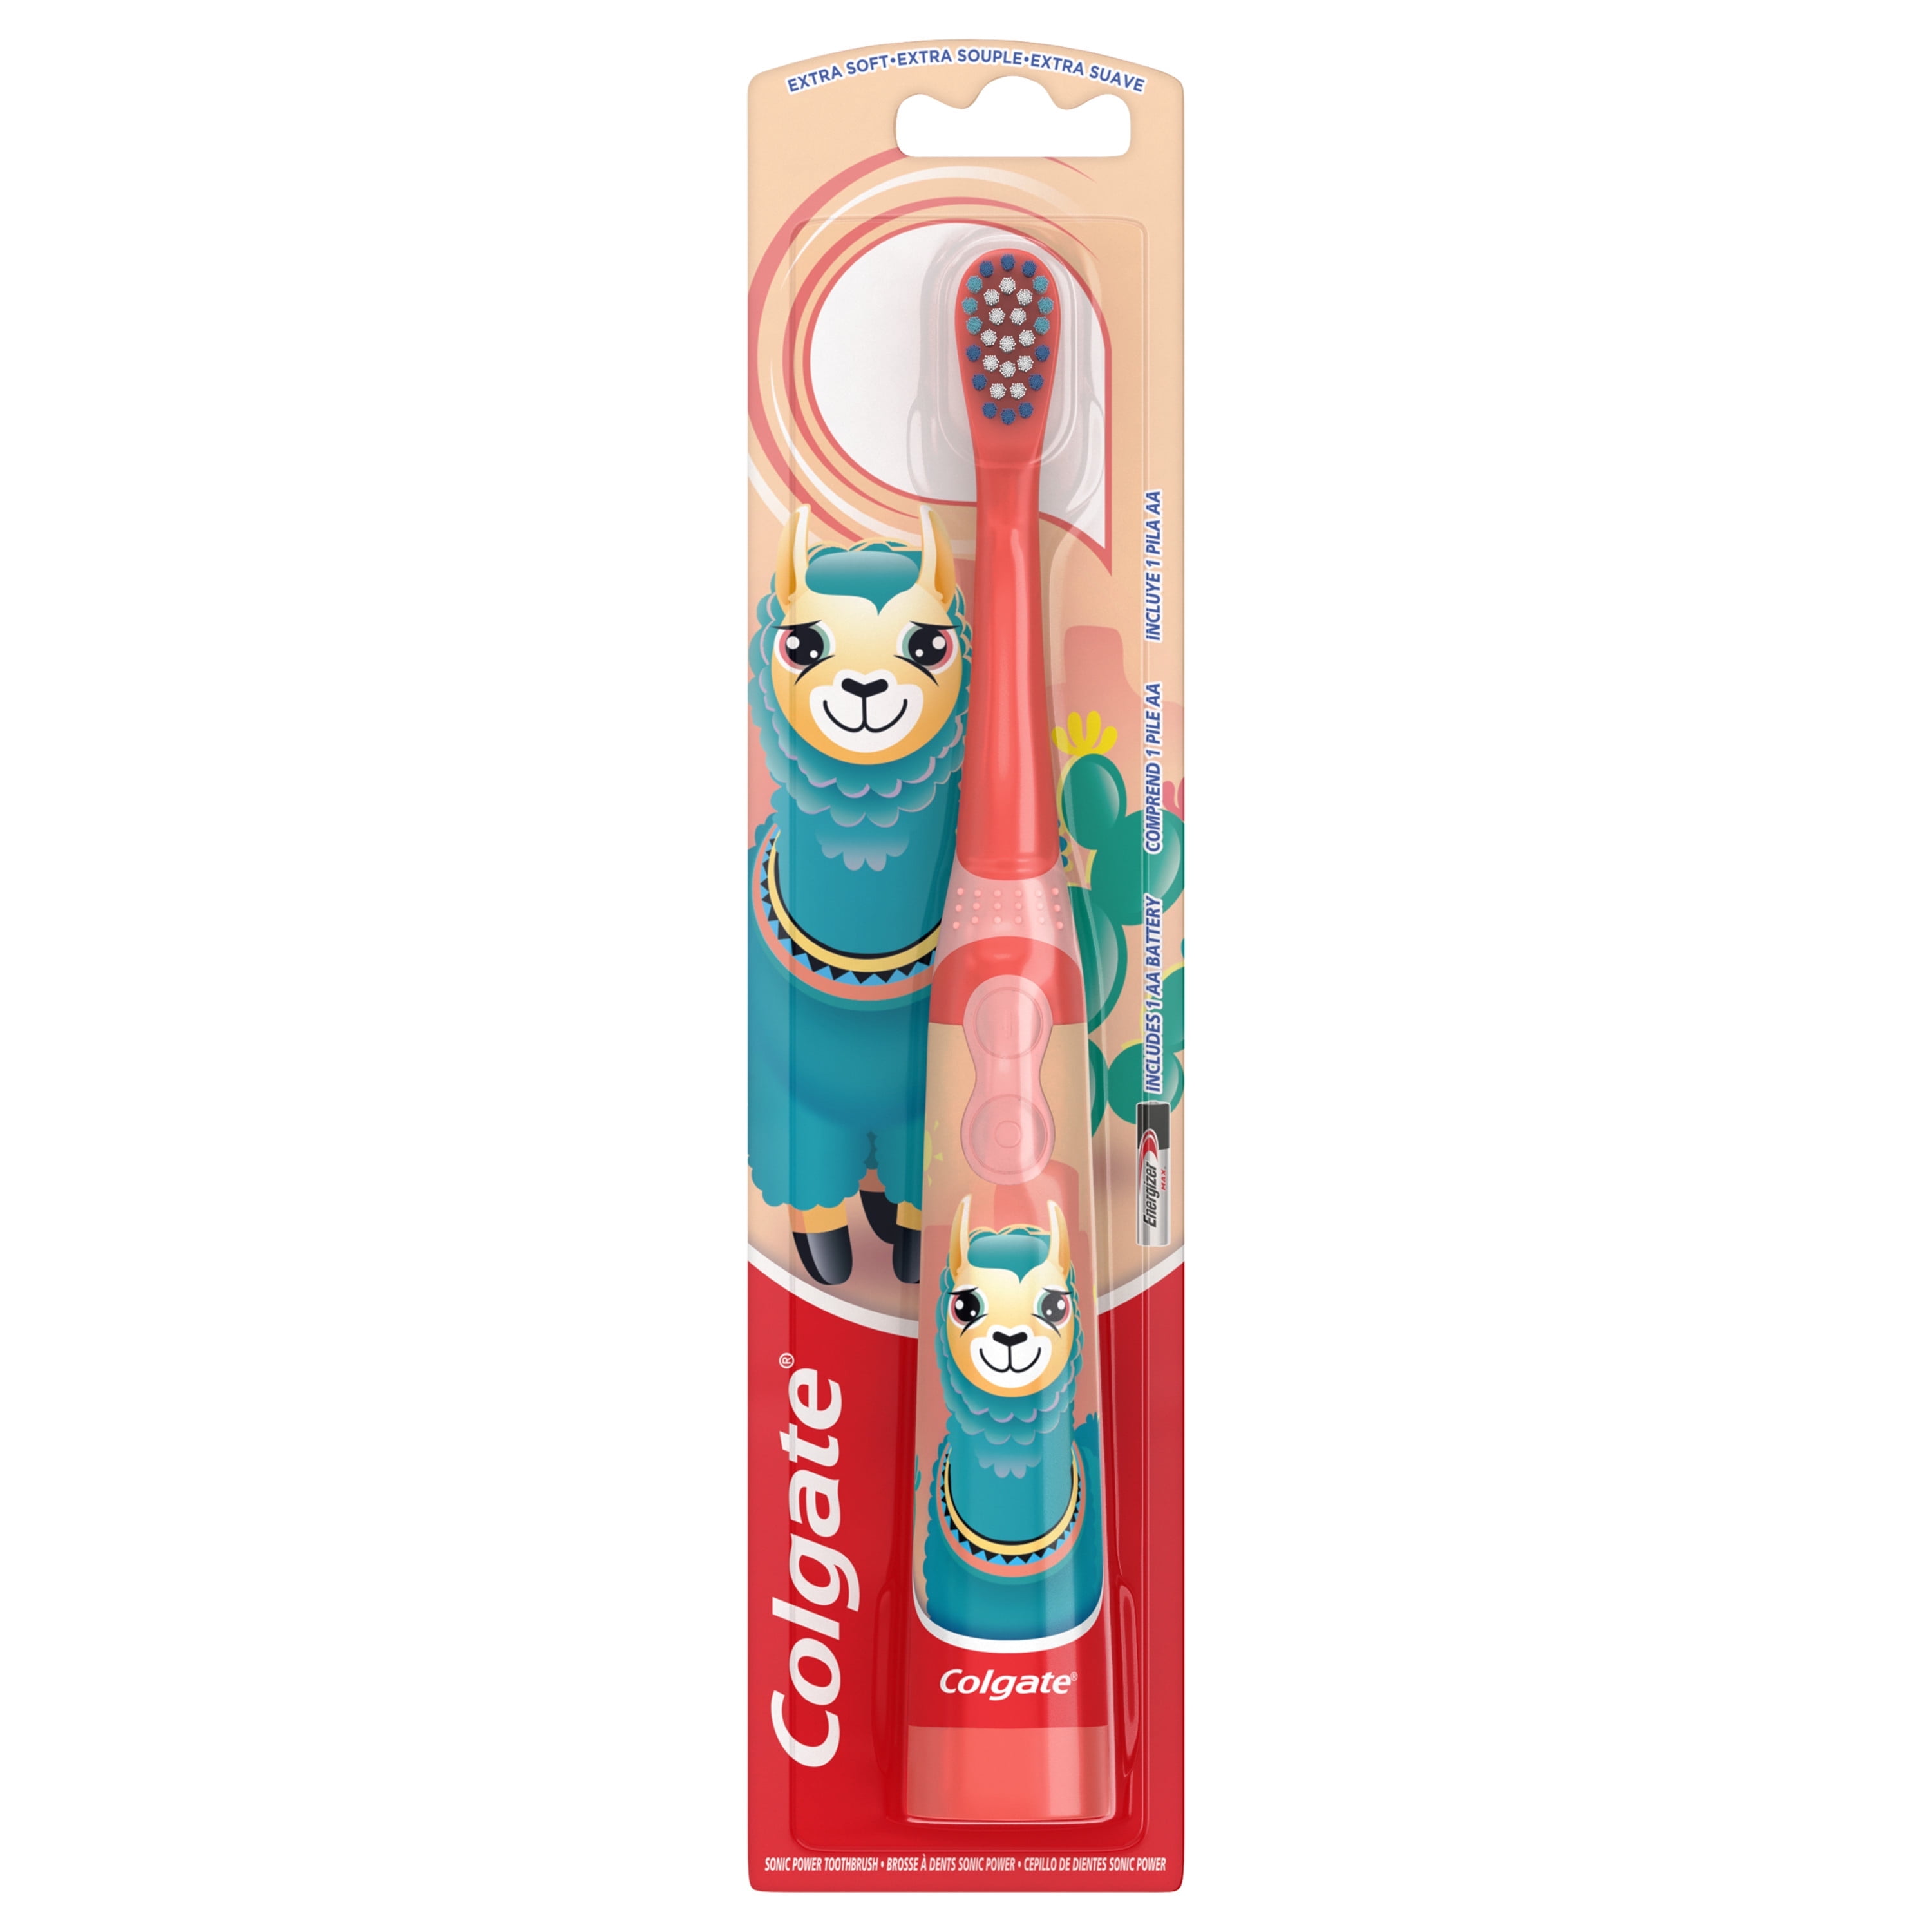 Colgate Kids Battery Toothbrush, Llama Toothbrush, 1 Pack - image 1 of 9